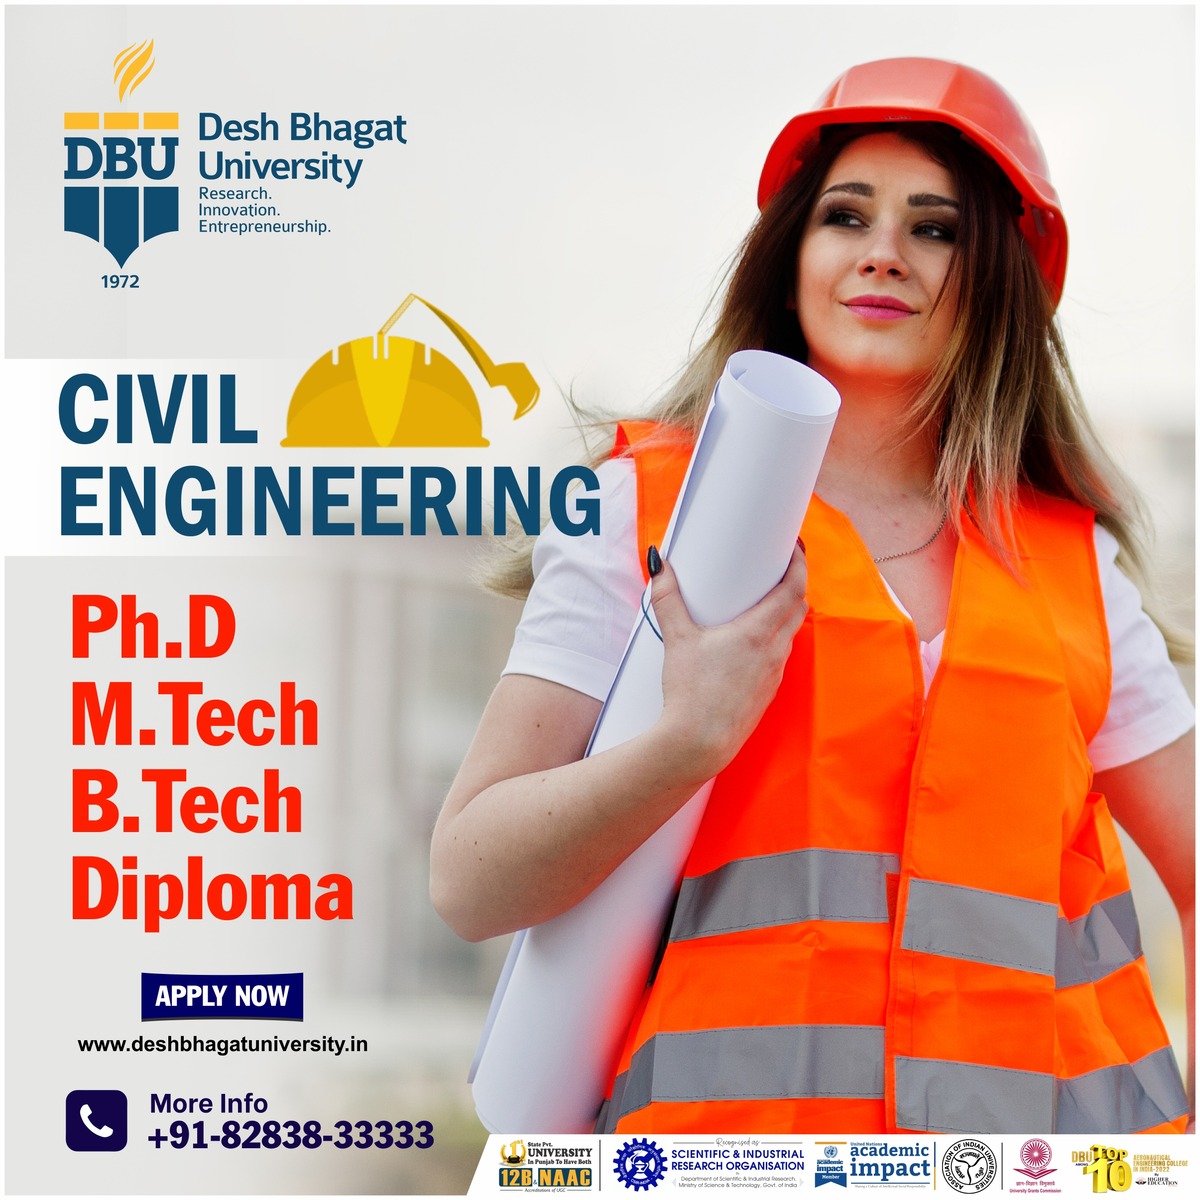 Faculty of CIVIL ENGINEEING Ph. D M. Tech B. Tech Diploma